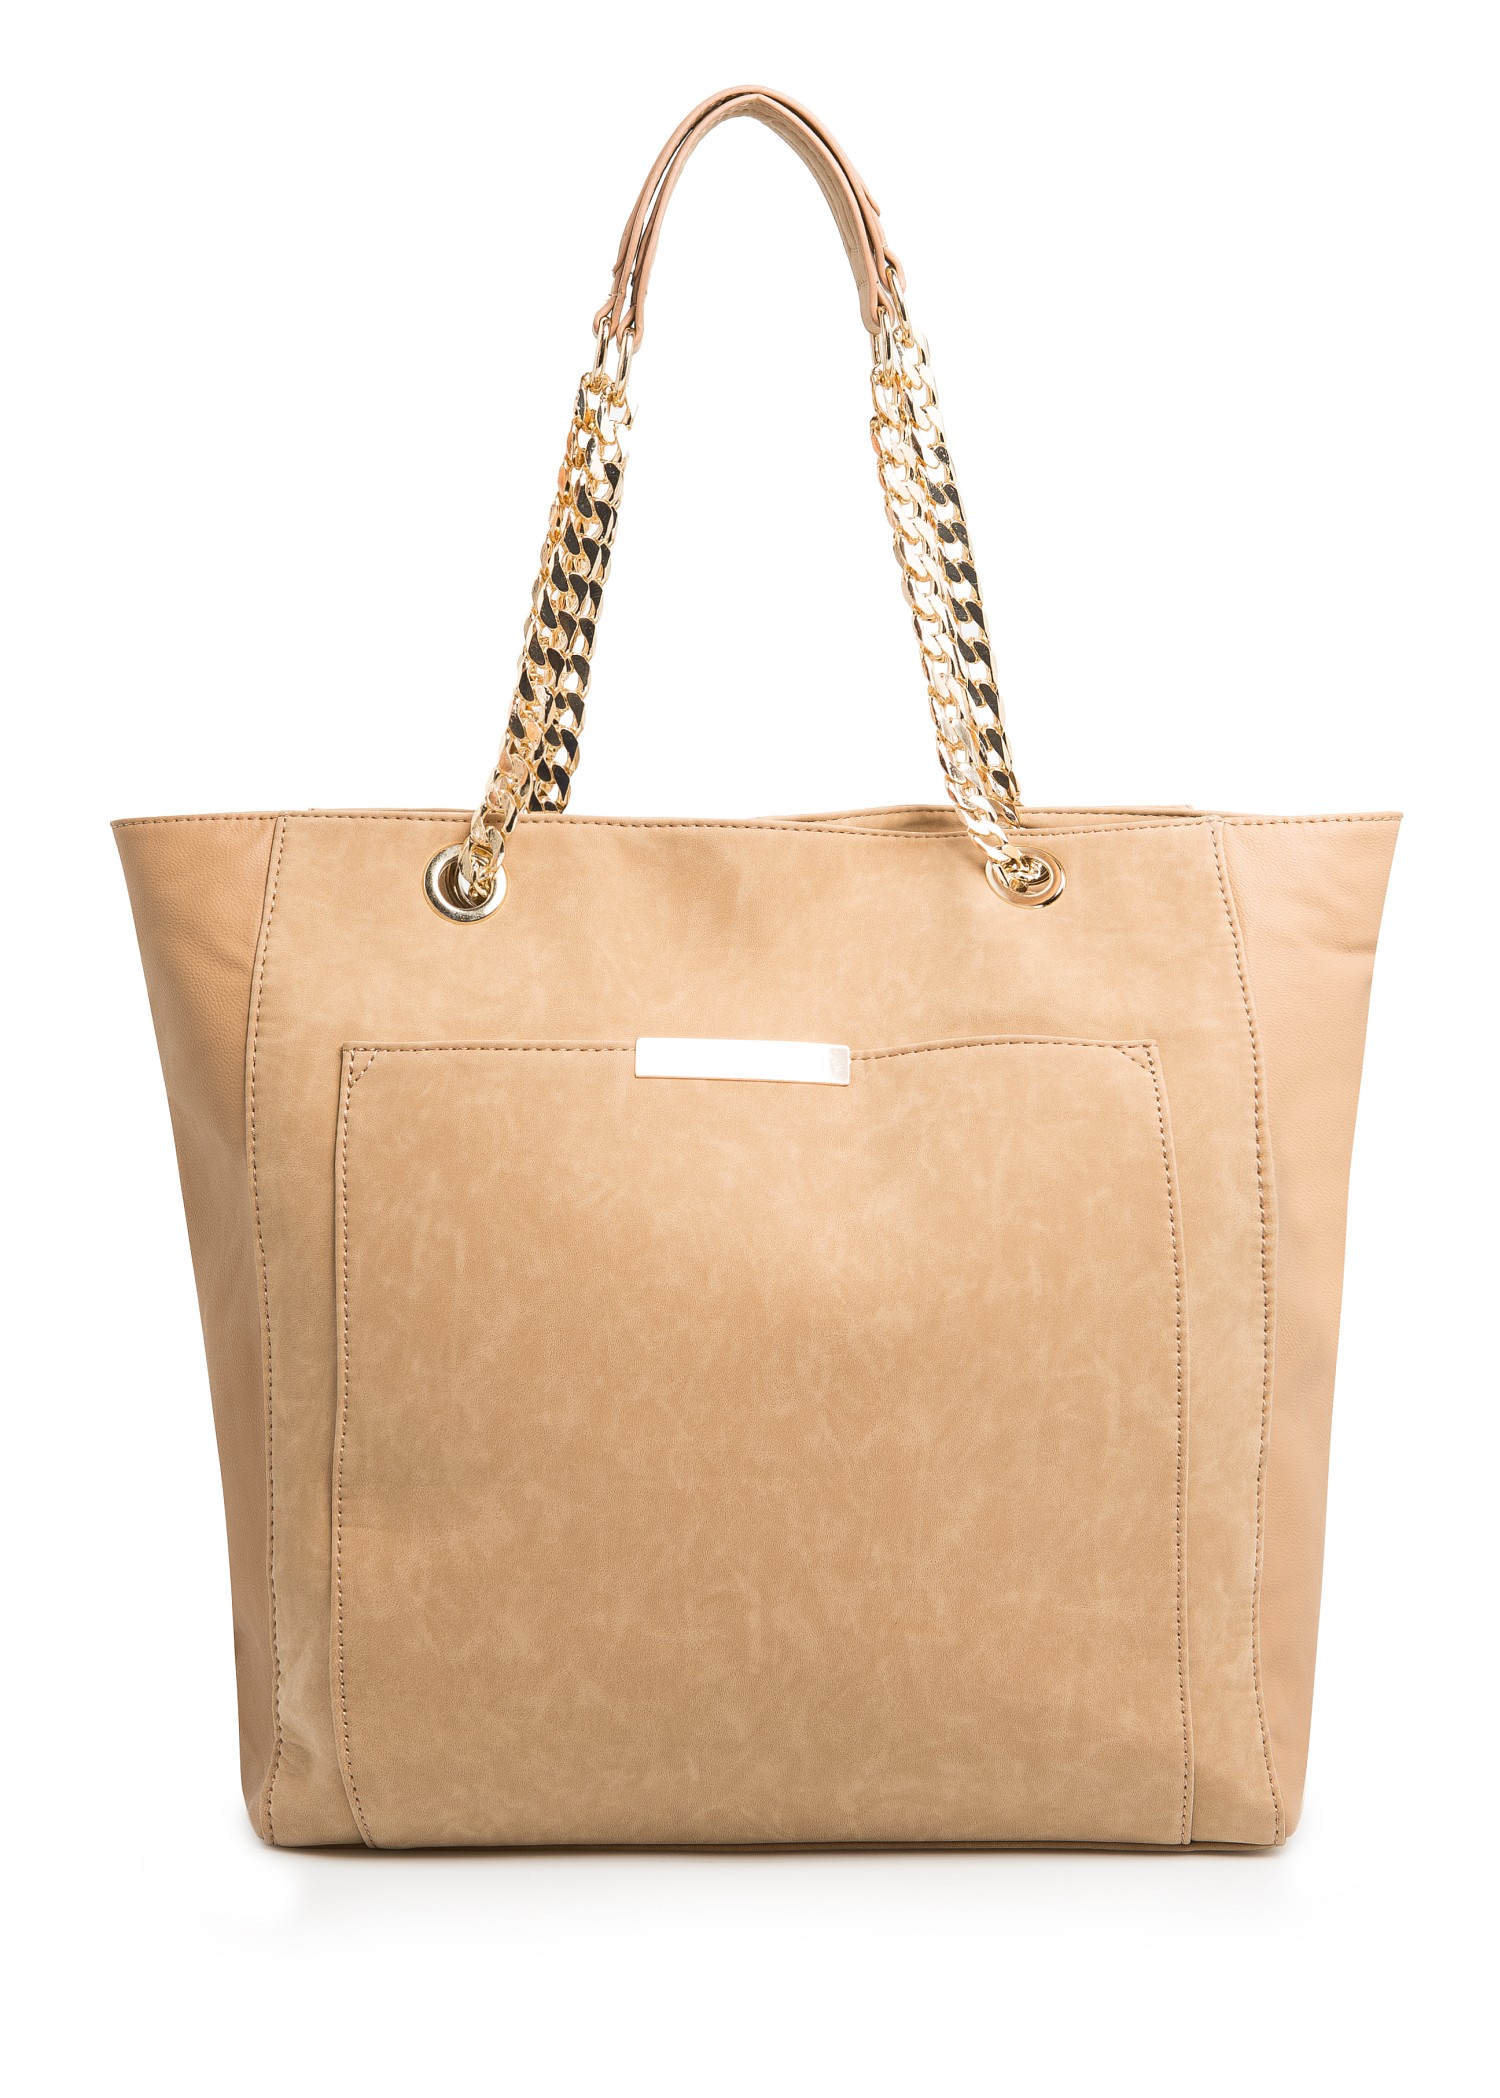 Lyst - Mango Touch Metal Details Shopper Bag in Natural